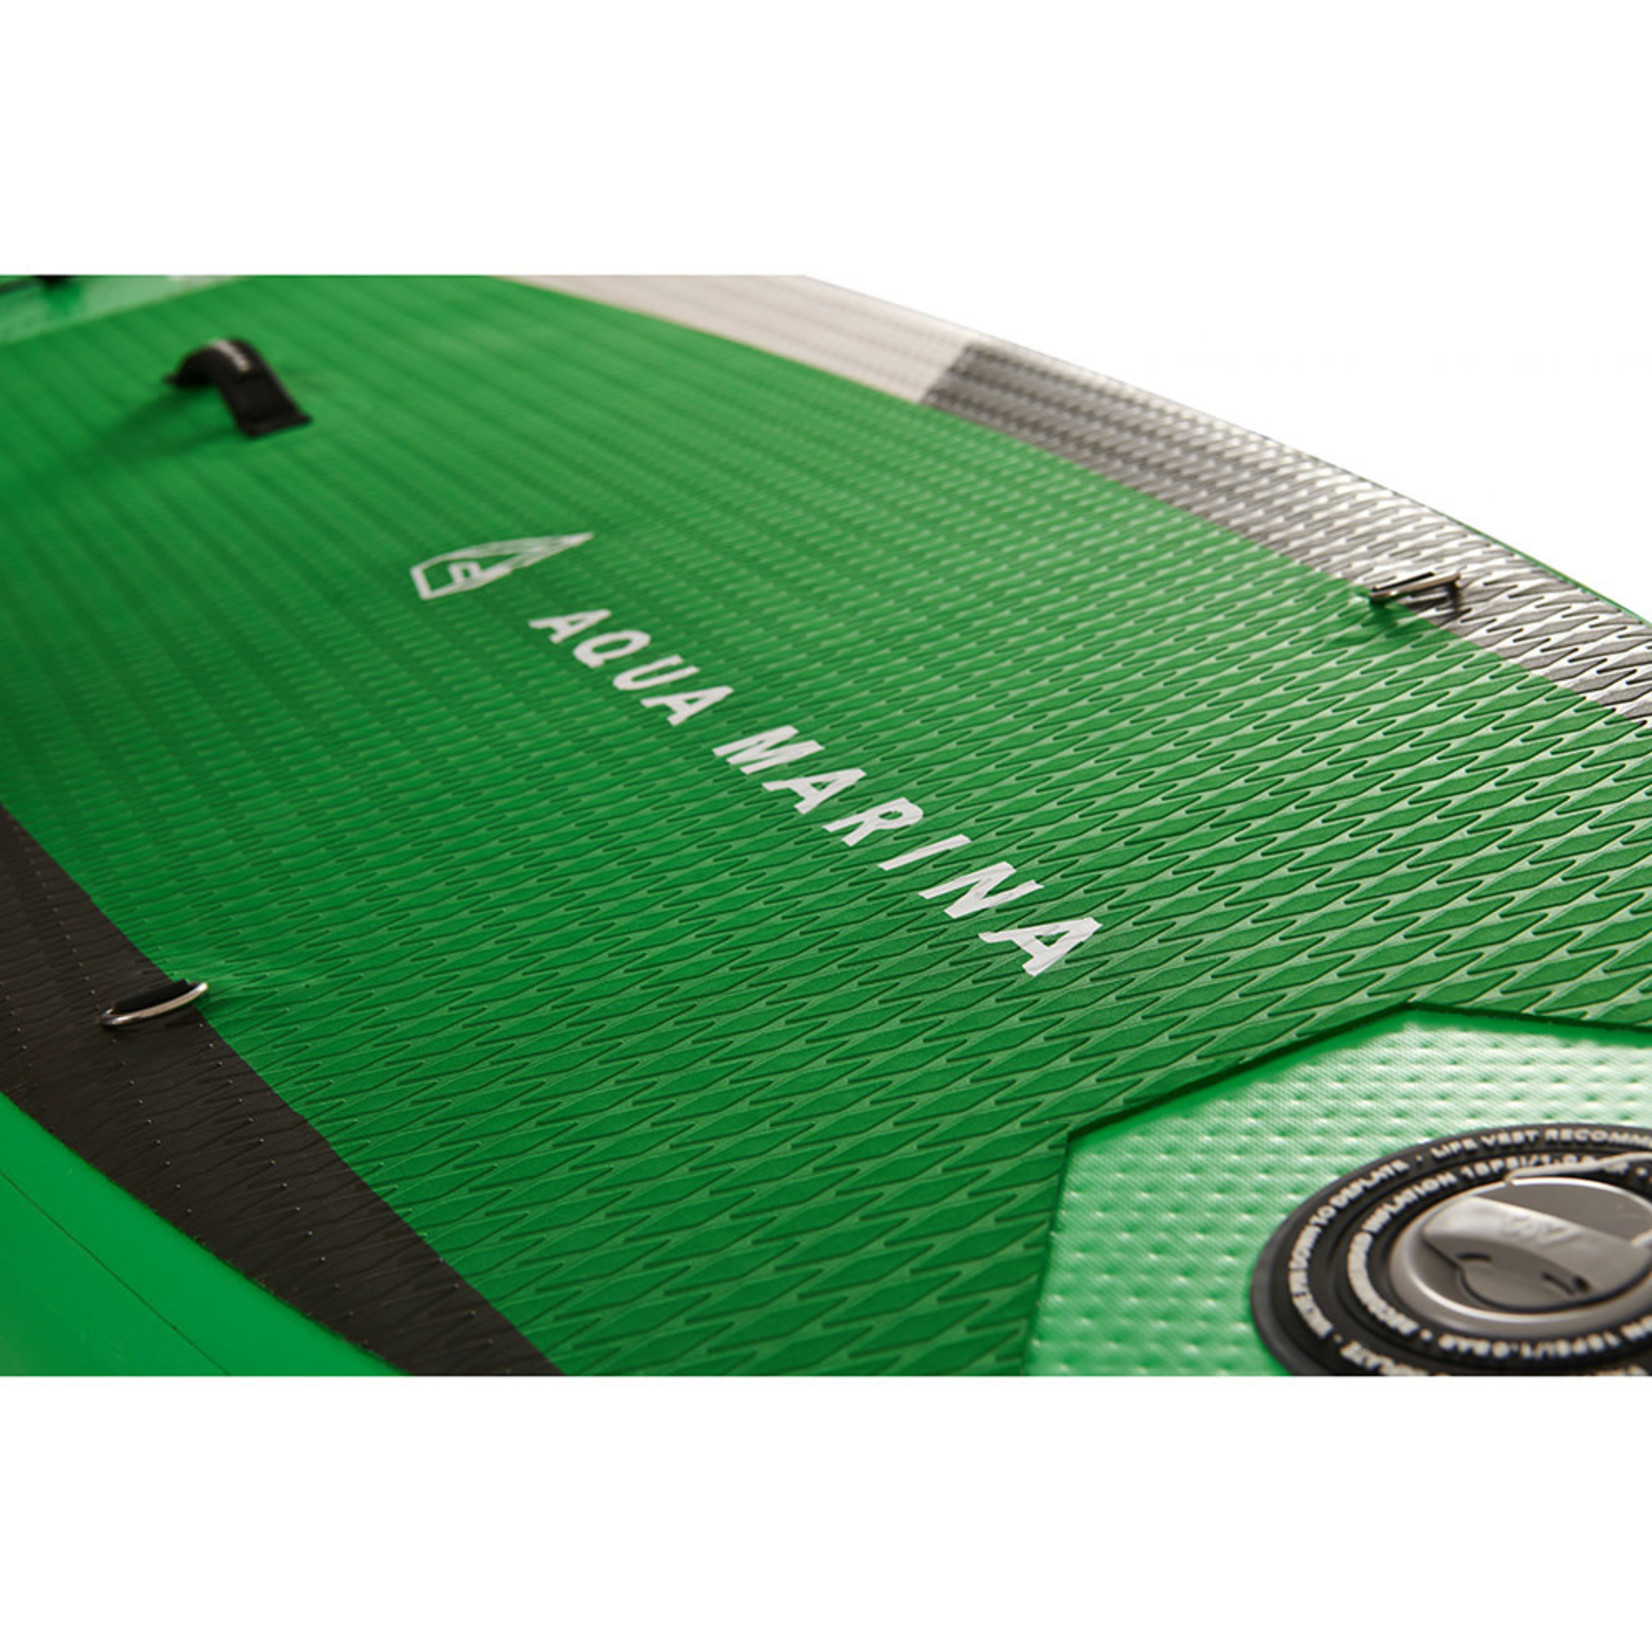 AQUAMARINA BREZZE Inflatable Paddle Board - 9'10¨ x 30 x 4.7¨